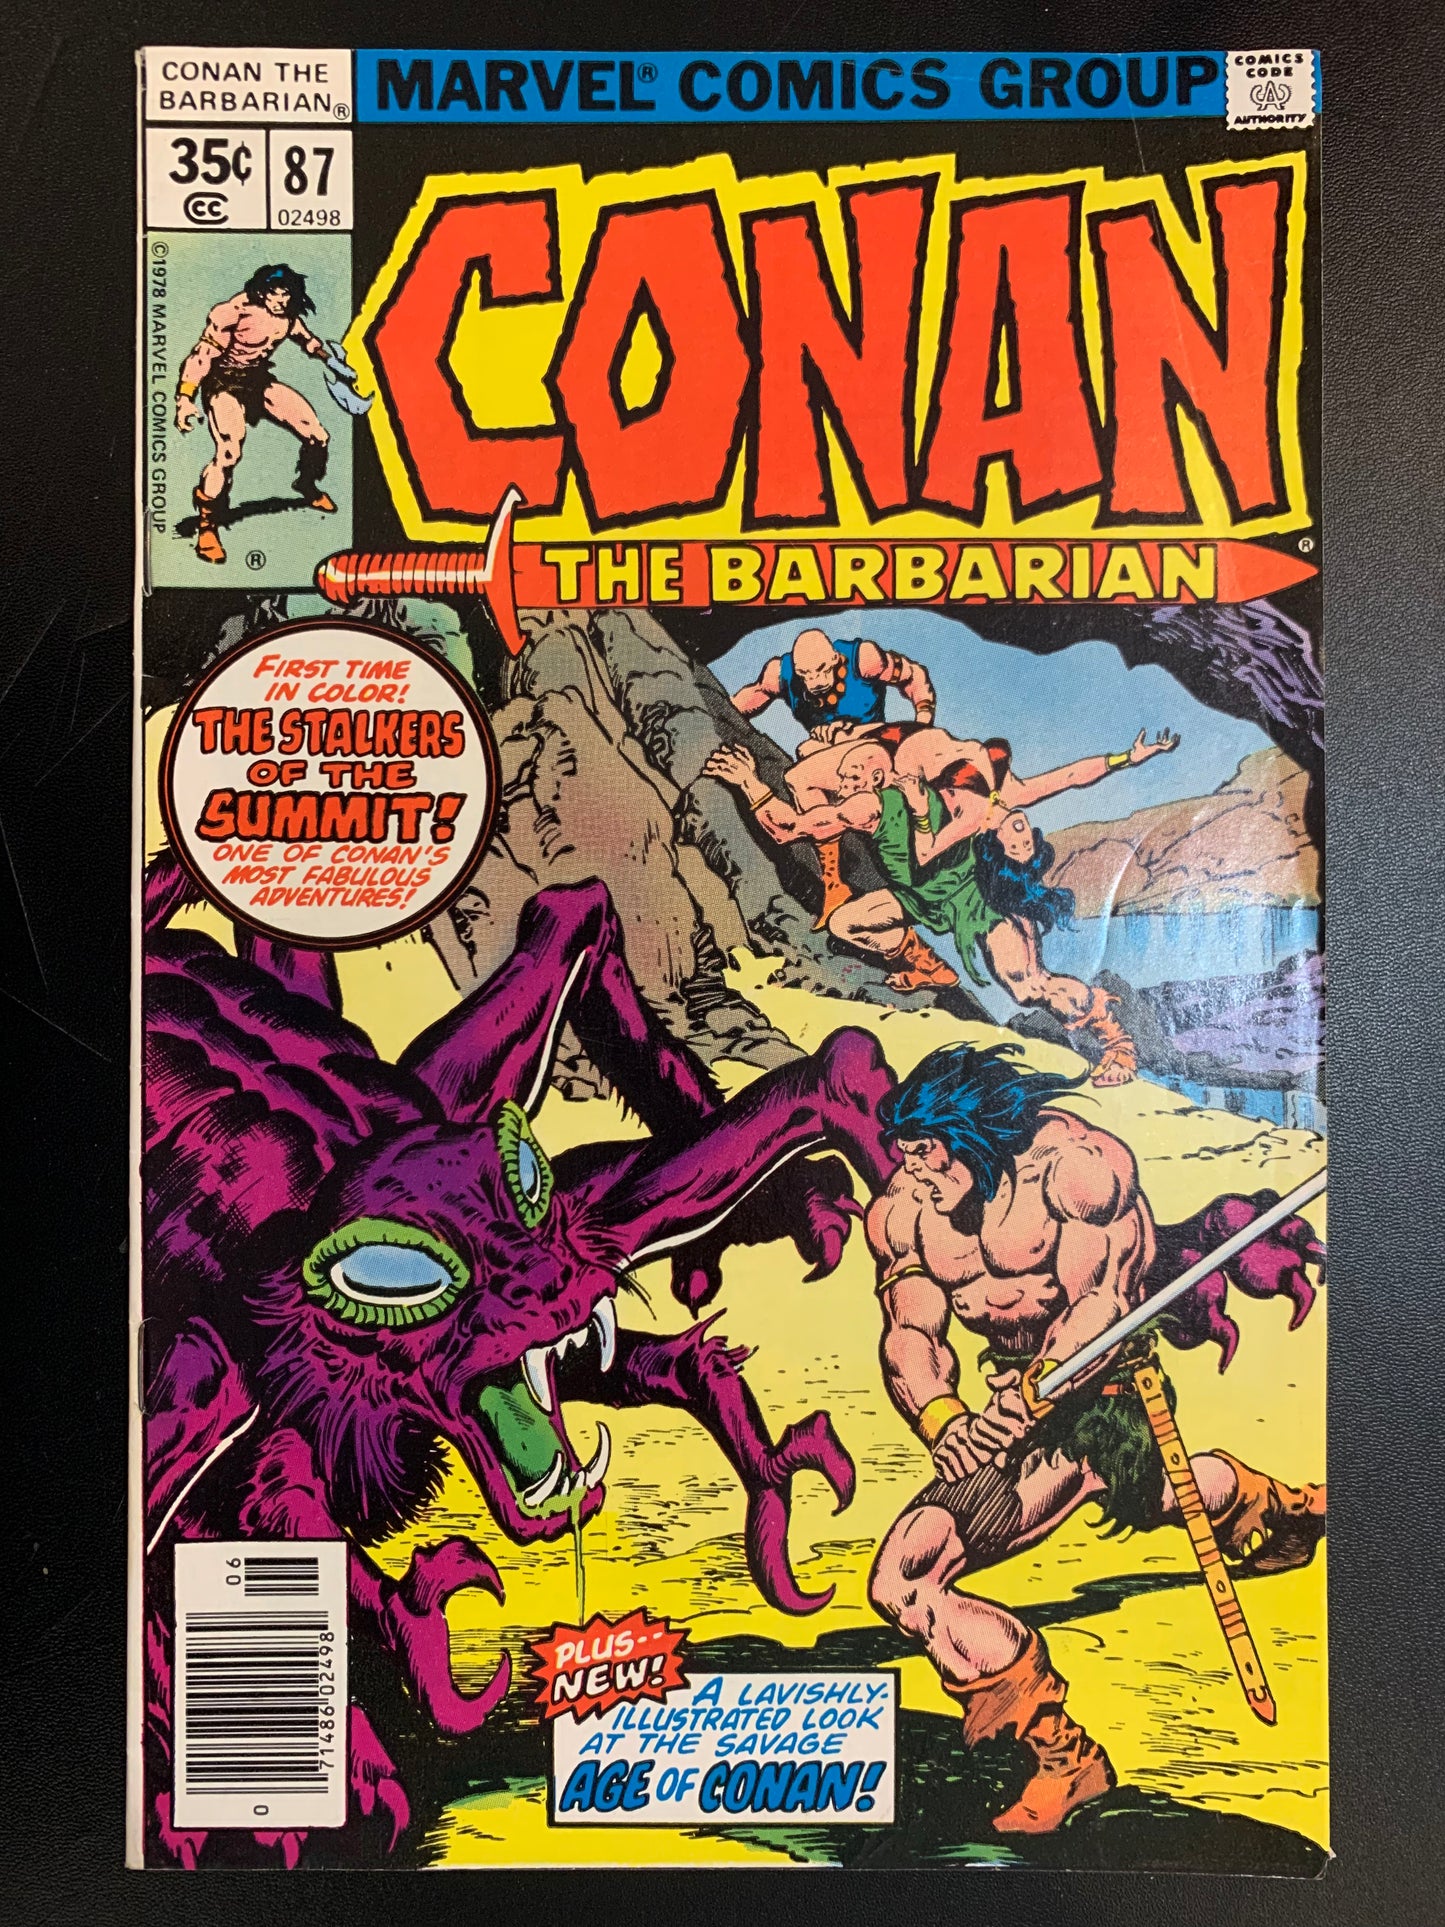 Conan the Barbarian #87